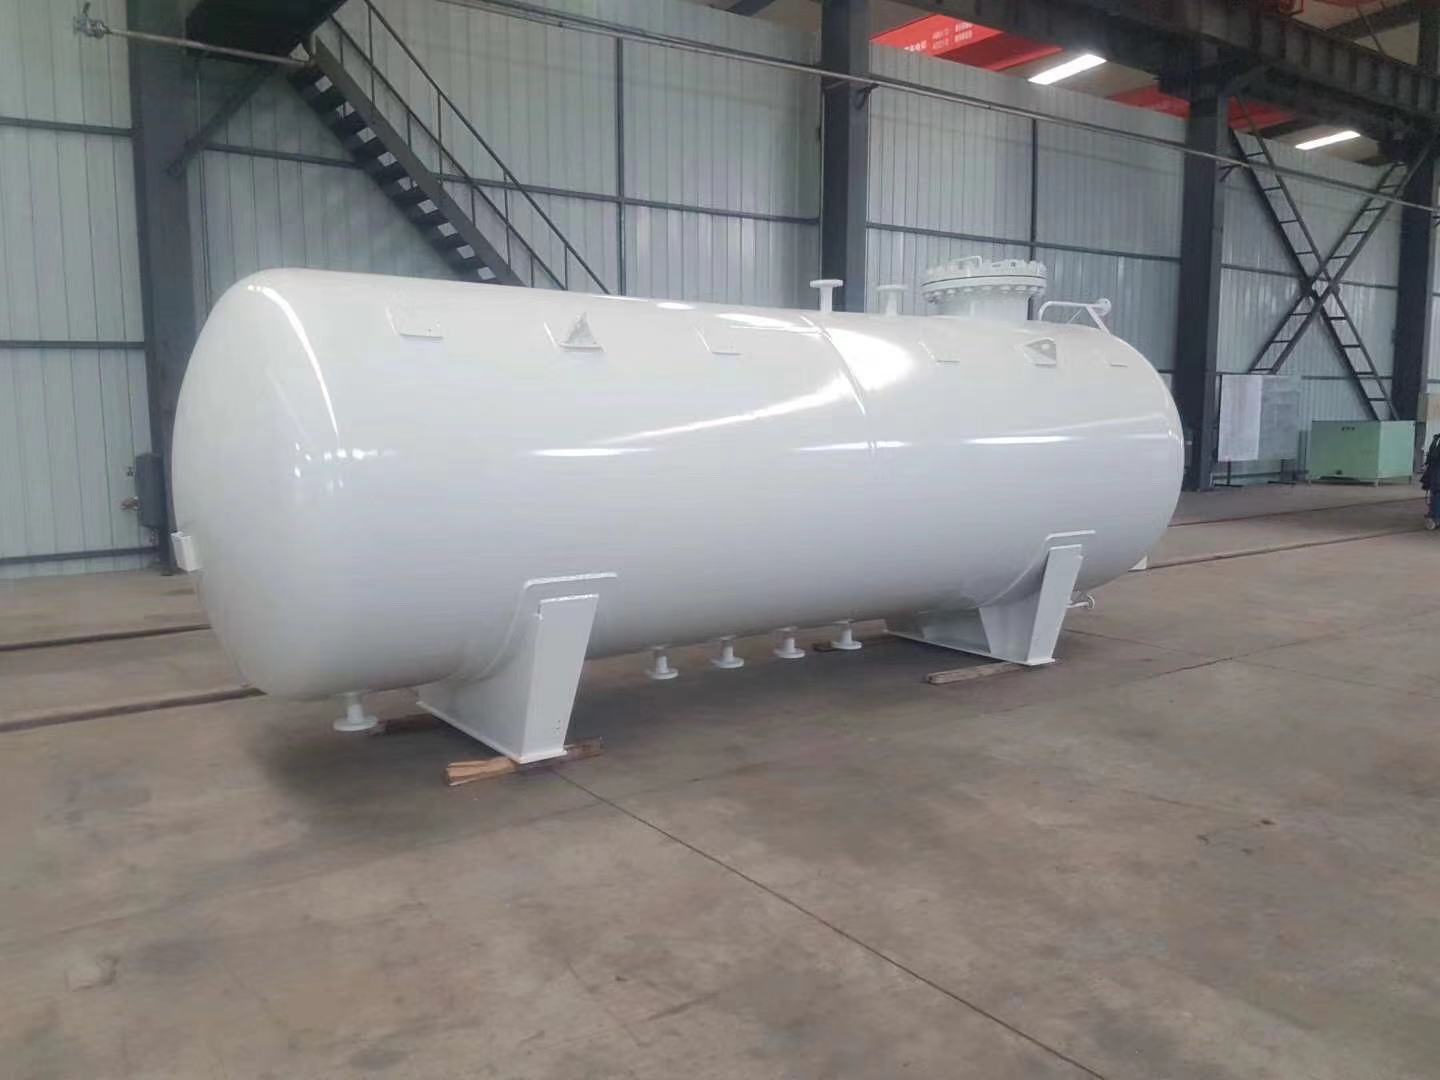 Horizontal liquefied gas storage tank inspection plan